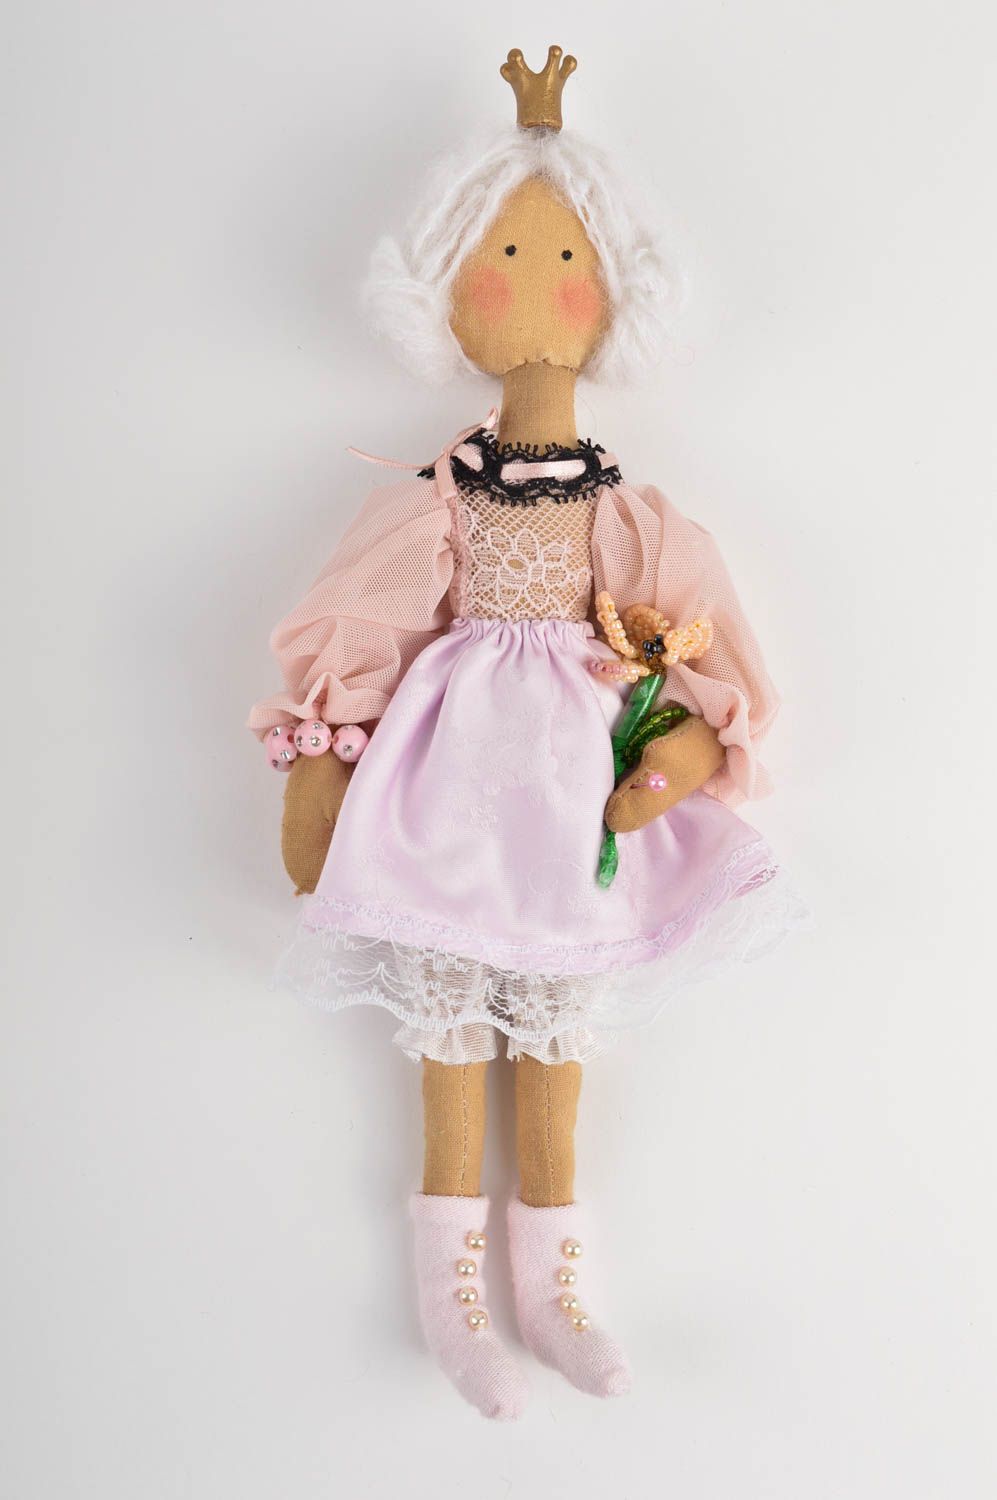 Handmade doll princess stuffed toy designer childrens toy decoration ideas photo 2